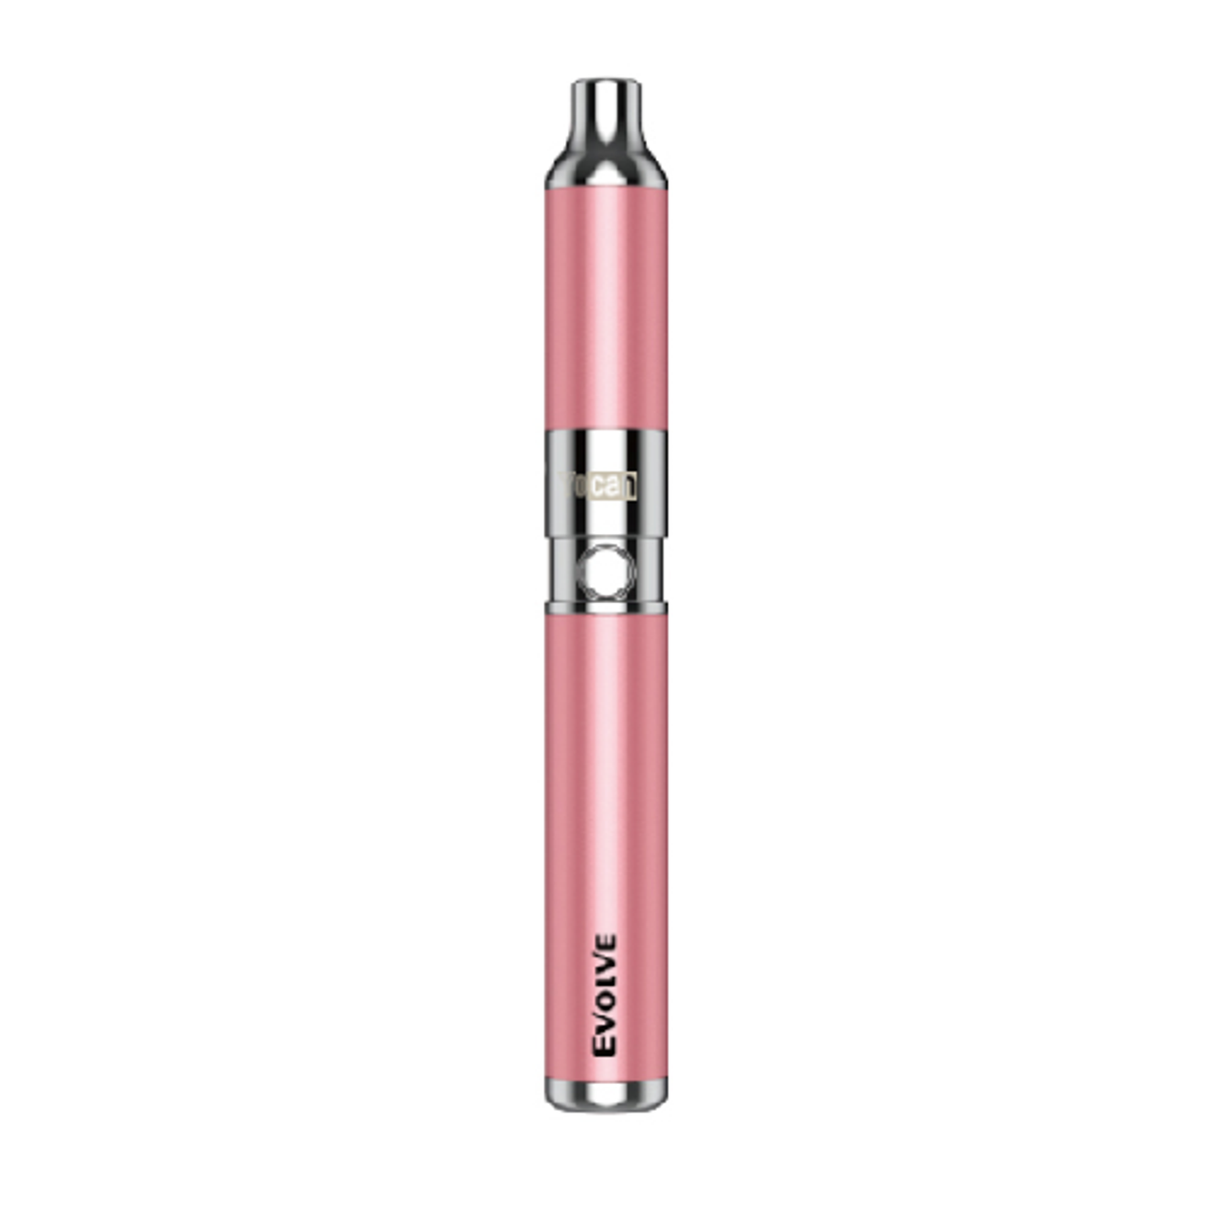 Yocan Evolve Vaporizer in Sakura Pink, Portable Dab/Wax Pen with 650mAh Battery - Front View